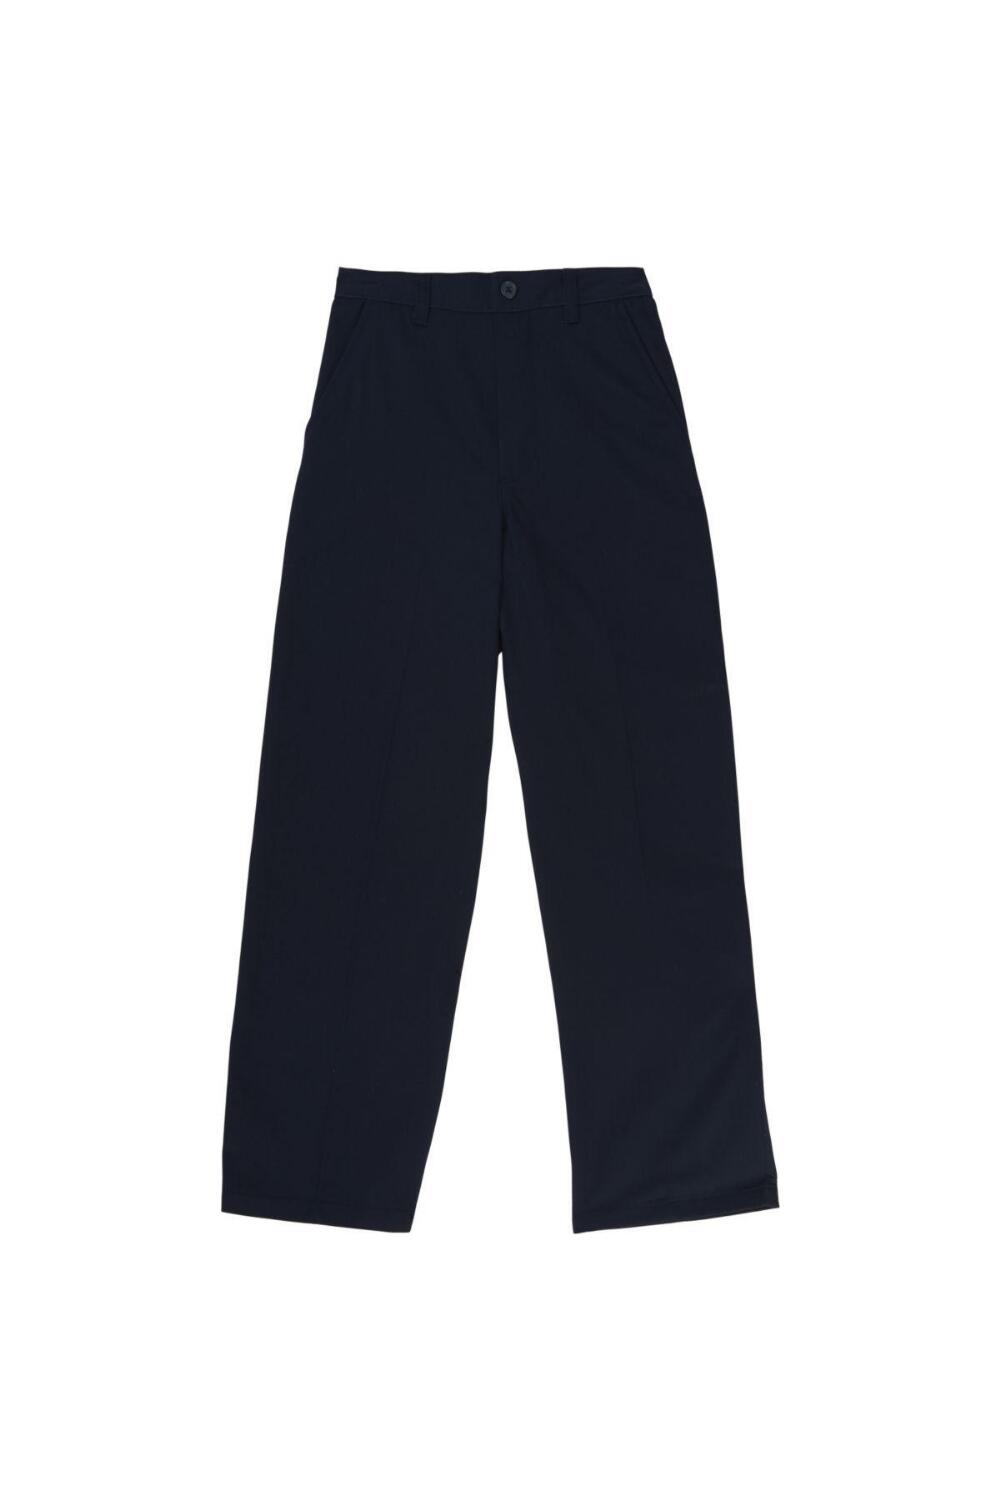 Boy's Adjustable Waist Double Knee Pant (Pant Color: Navy - YLS, Pant Size: Size 4T)